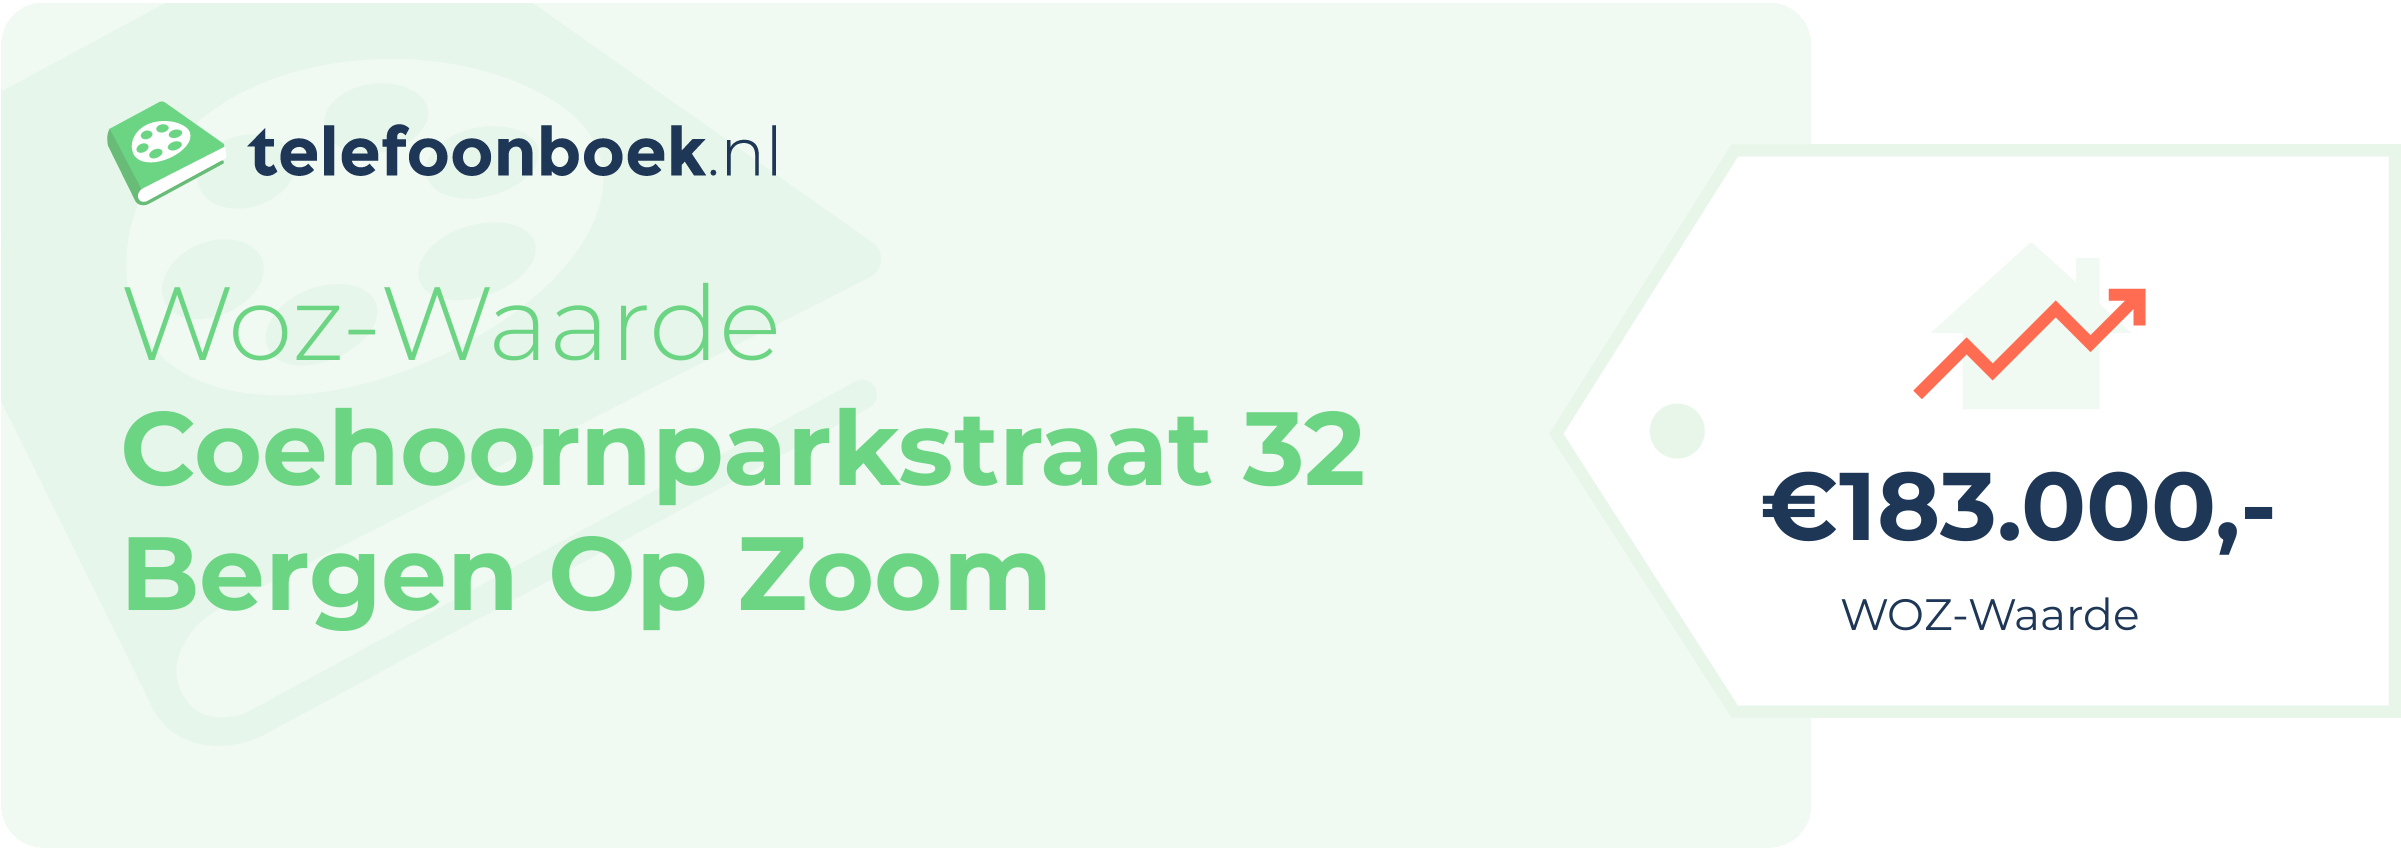 WOZ-waarde Coehoornparkstraat 32 Bergen Op Zoom